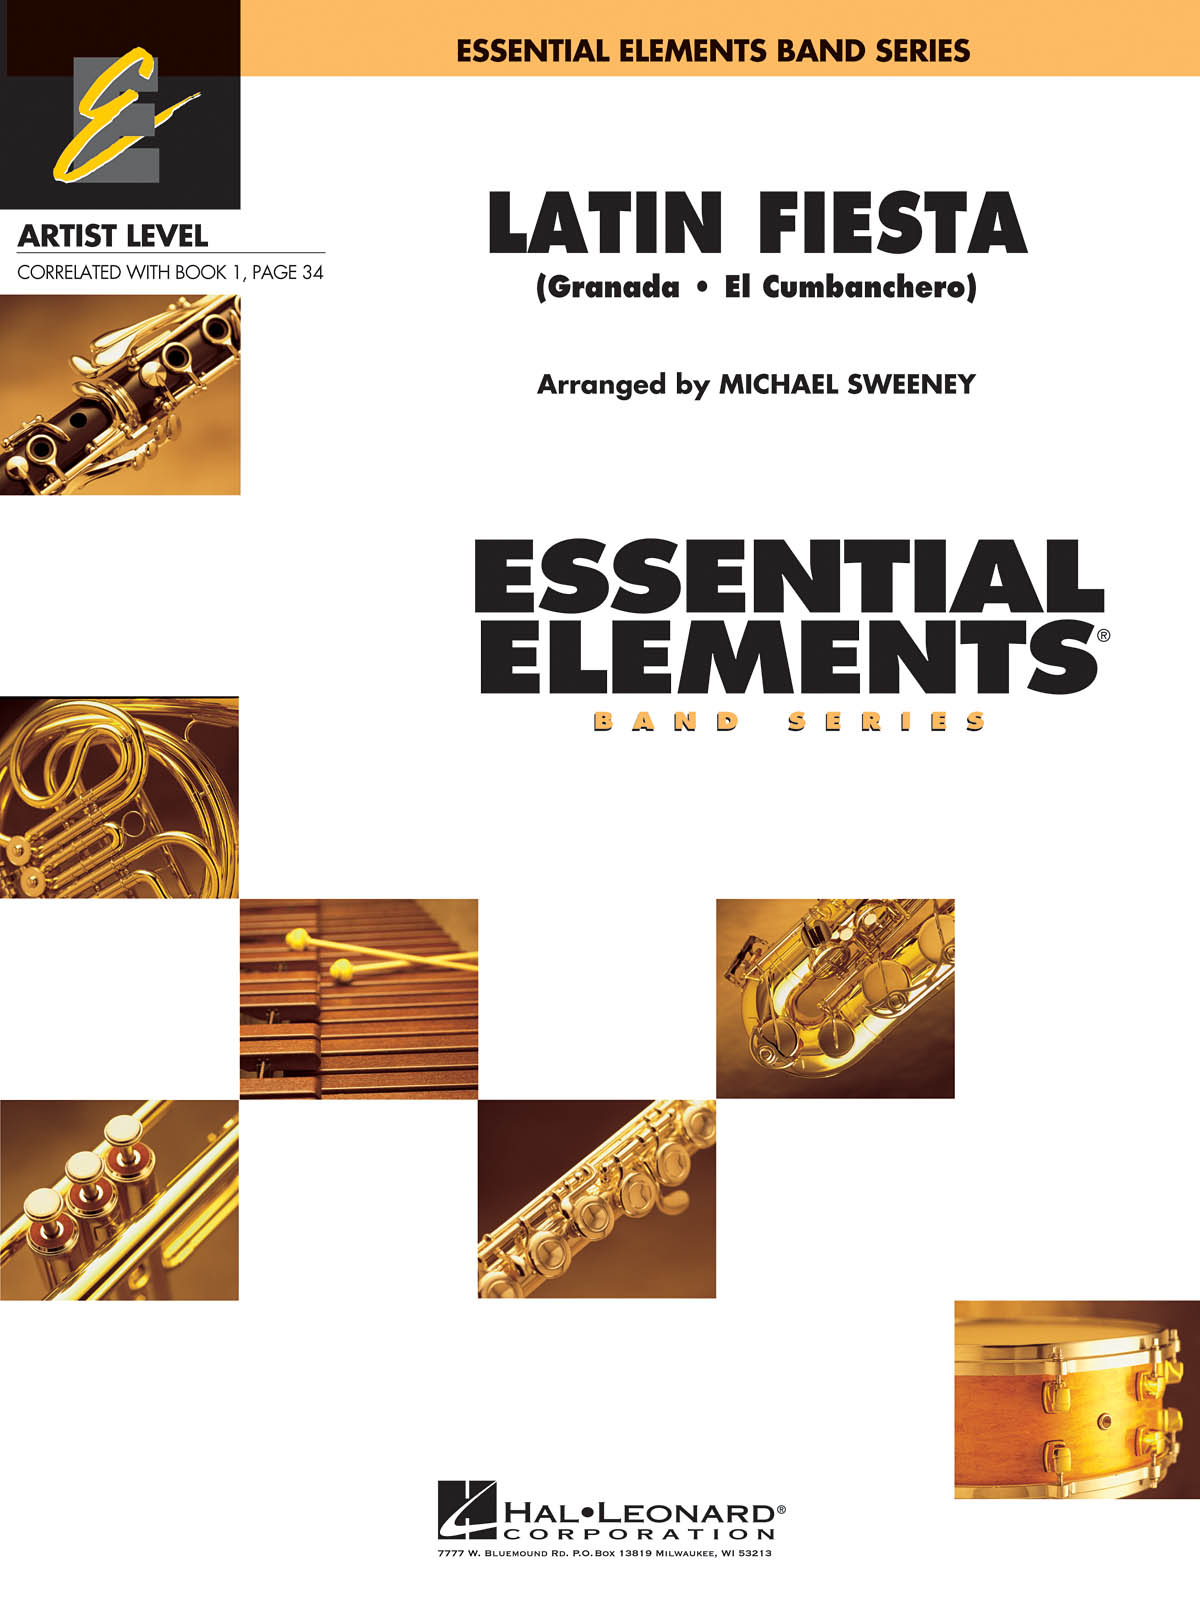 Latin Fiesta - noty pro orchestr